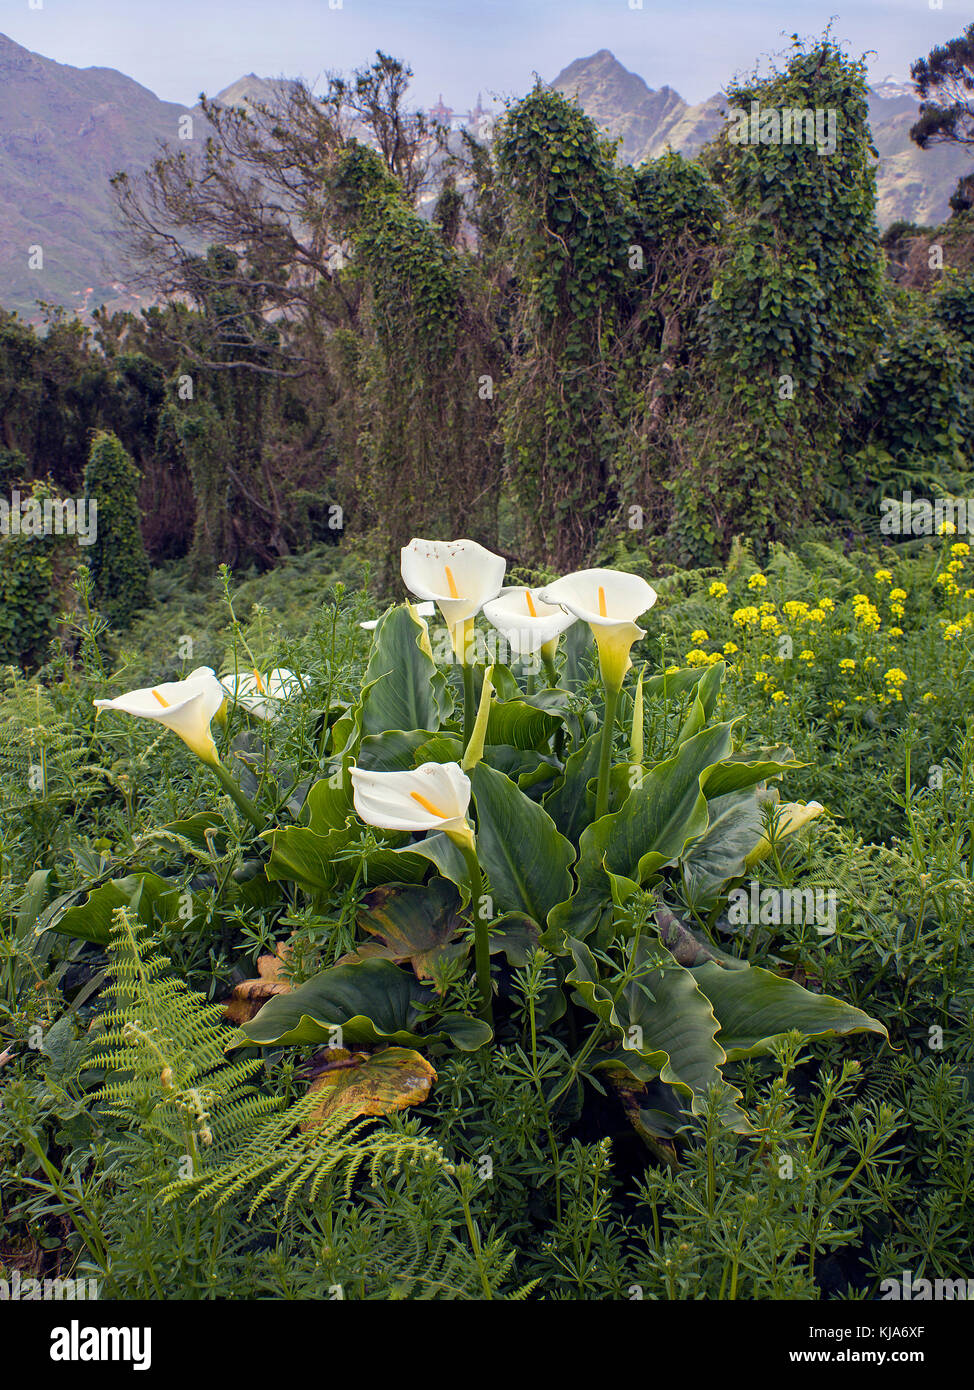 Gewoehnliche calla (zantedeschia aethiopica) auch zimmerkalla genannt, común, calla lily, altar de la isla de Tenerife, Islas Canarias, España Foto de stock